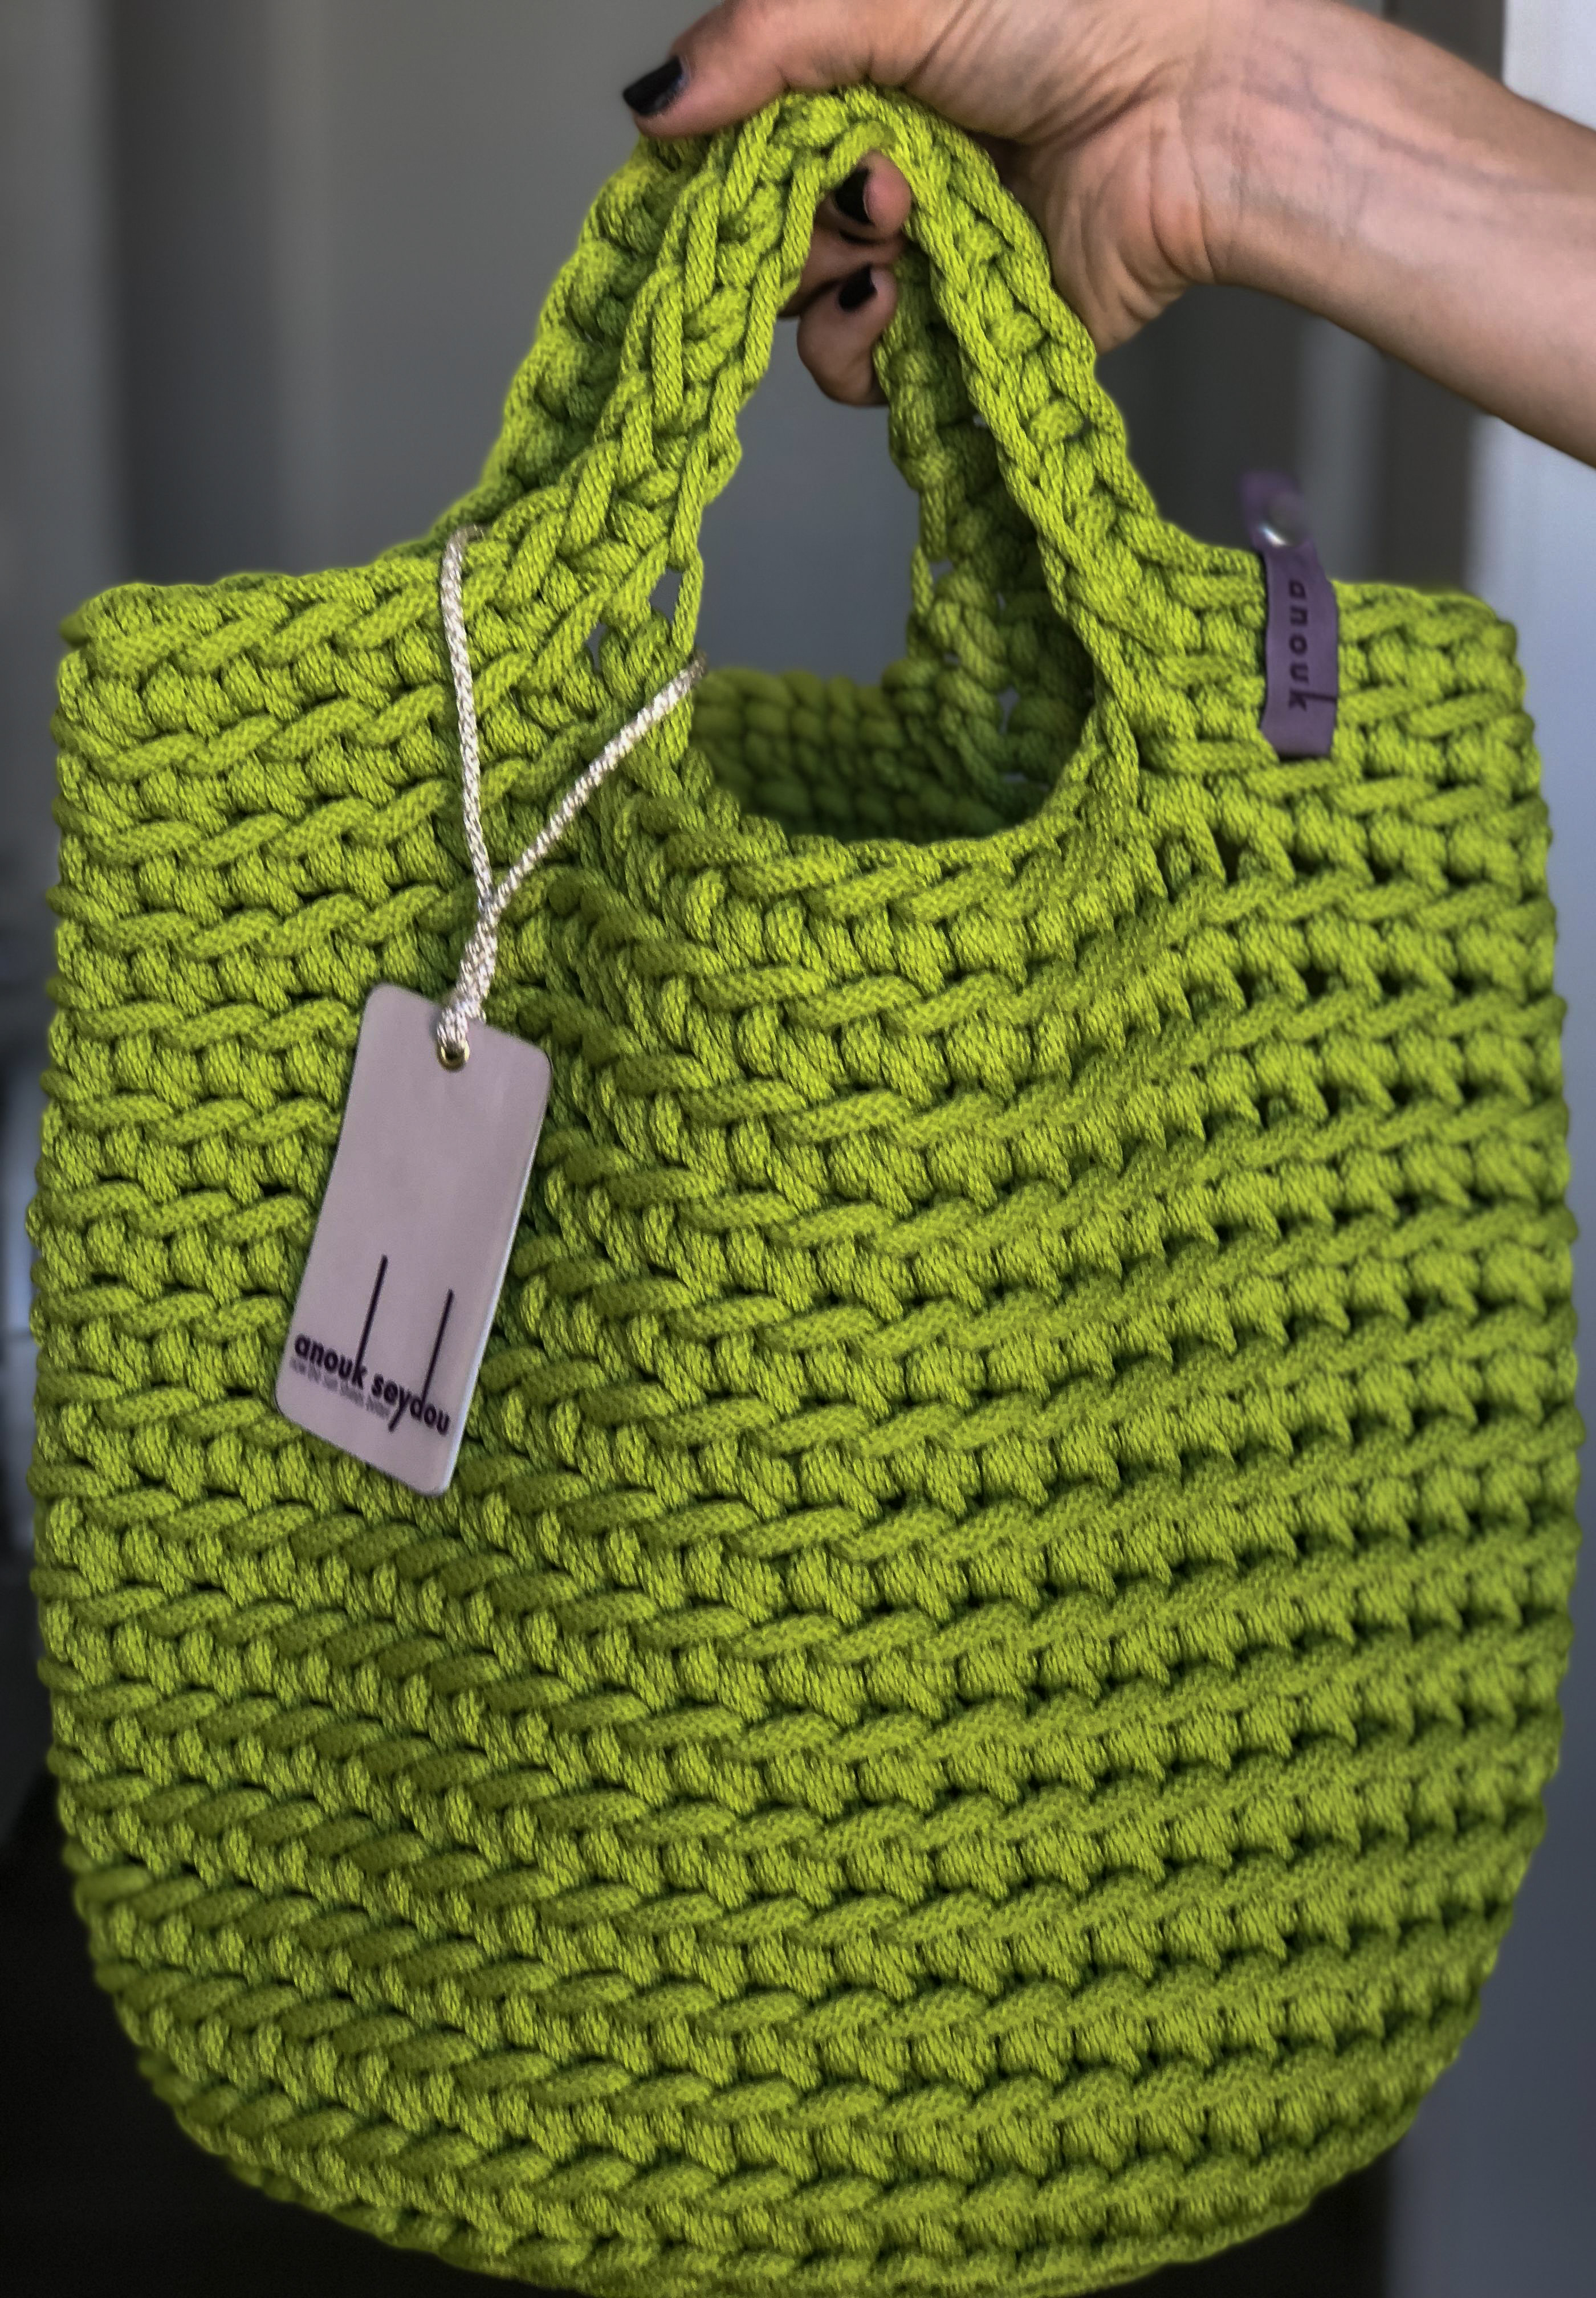 Crochet Tote Bag Free Patterns ~ 30 Easy Crochet Tote Bag Patterns ...